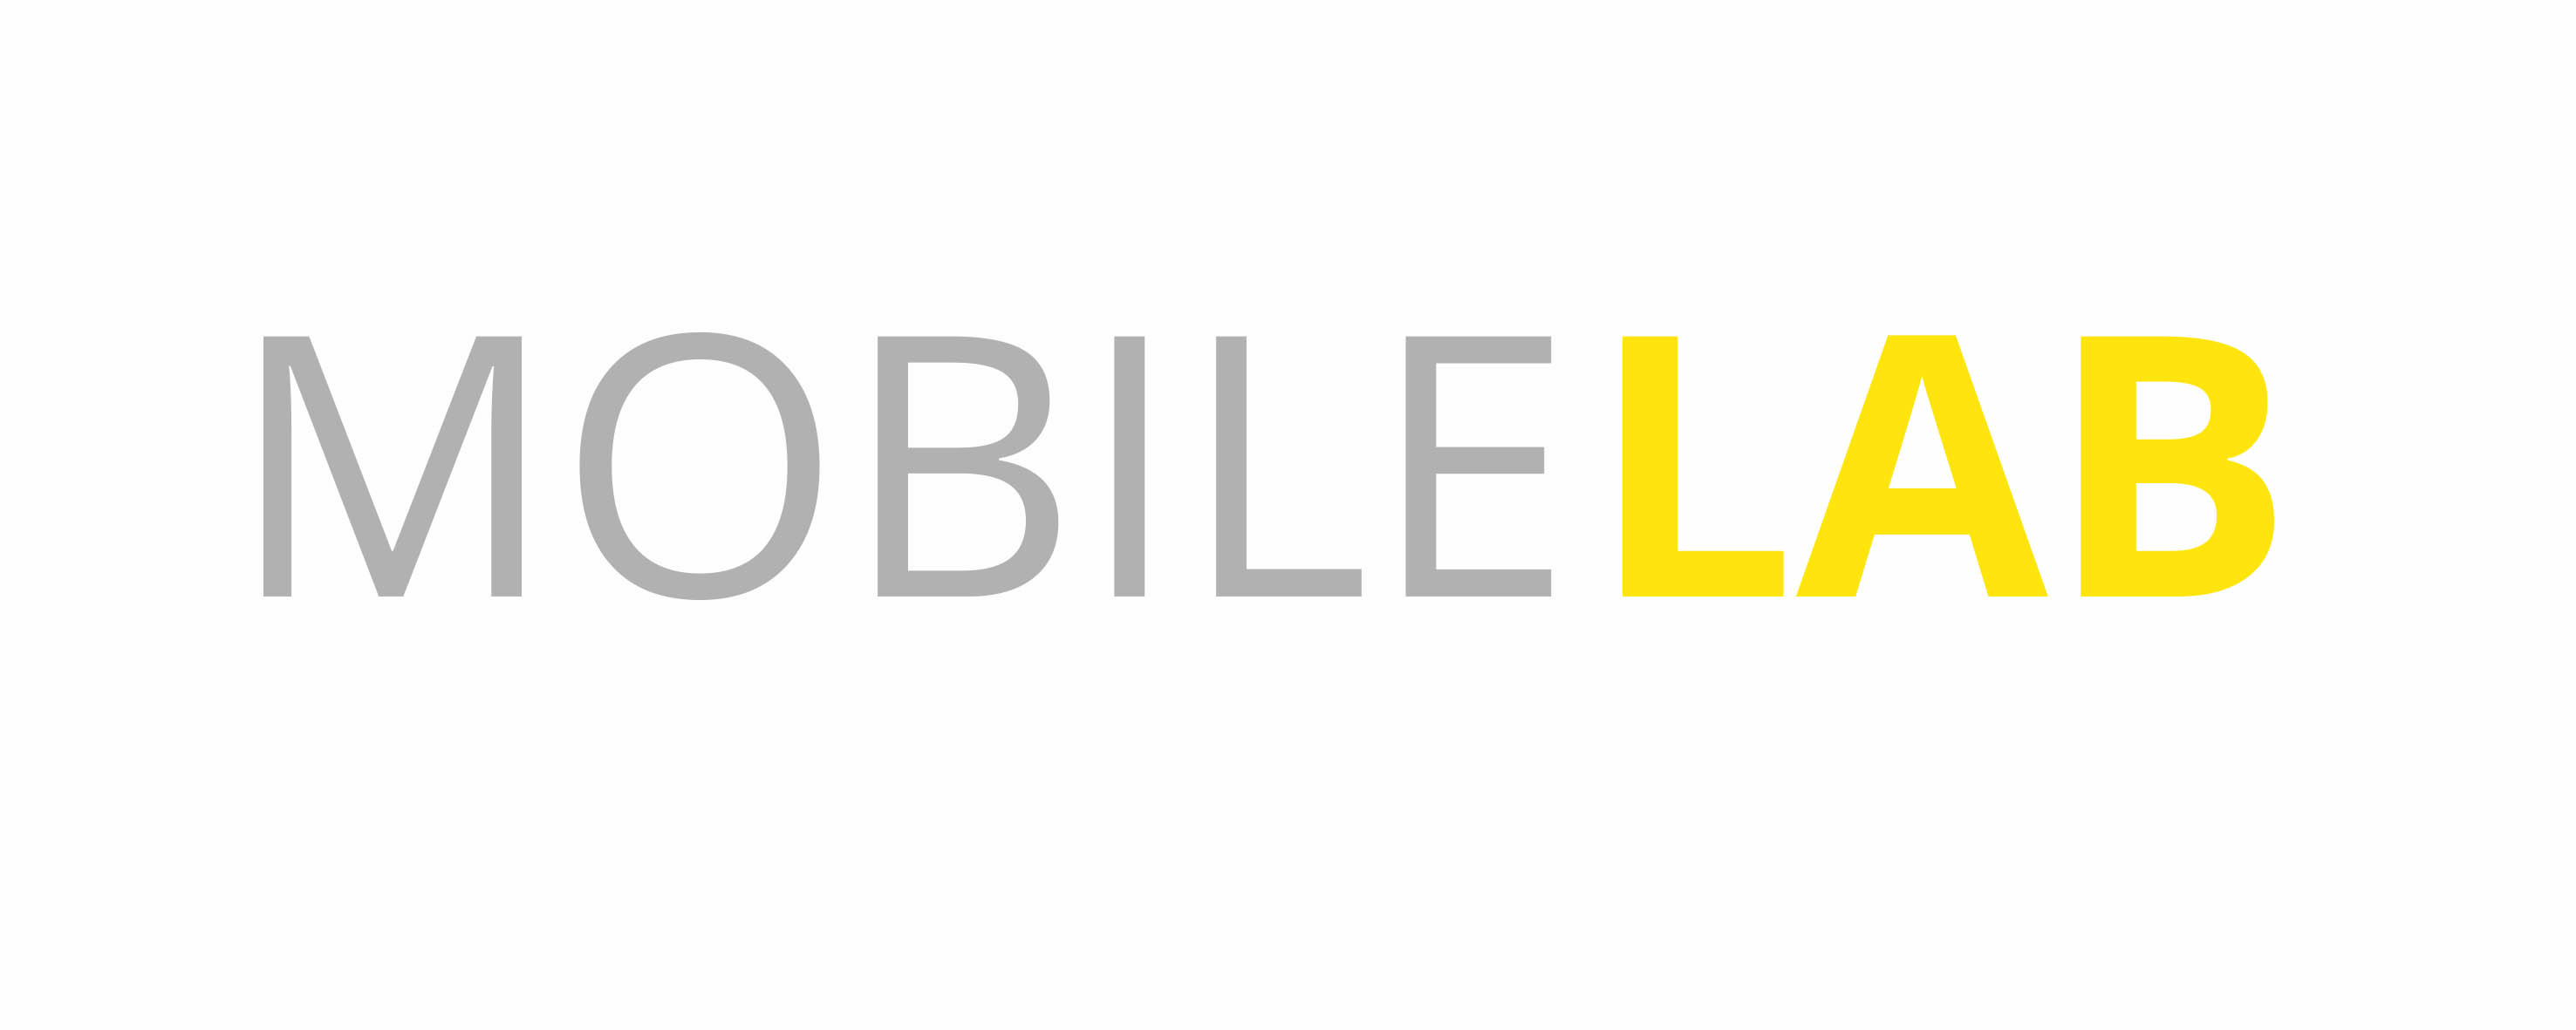 Mobile Lab LOGO 002